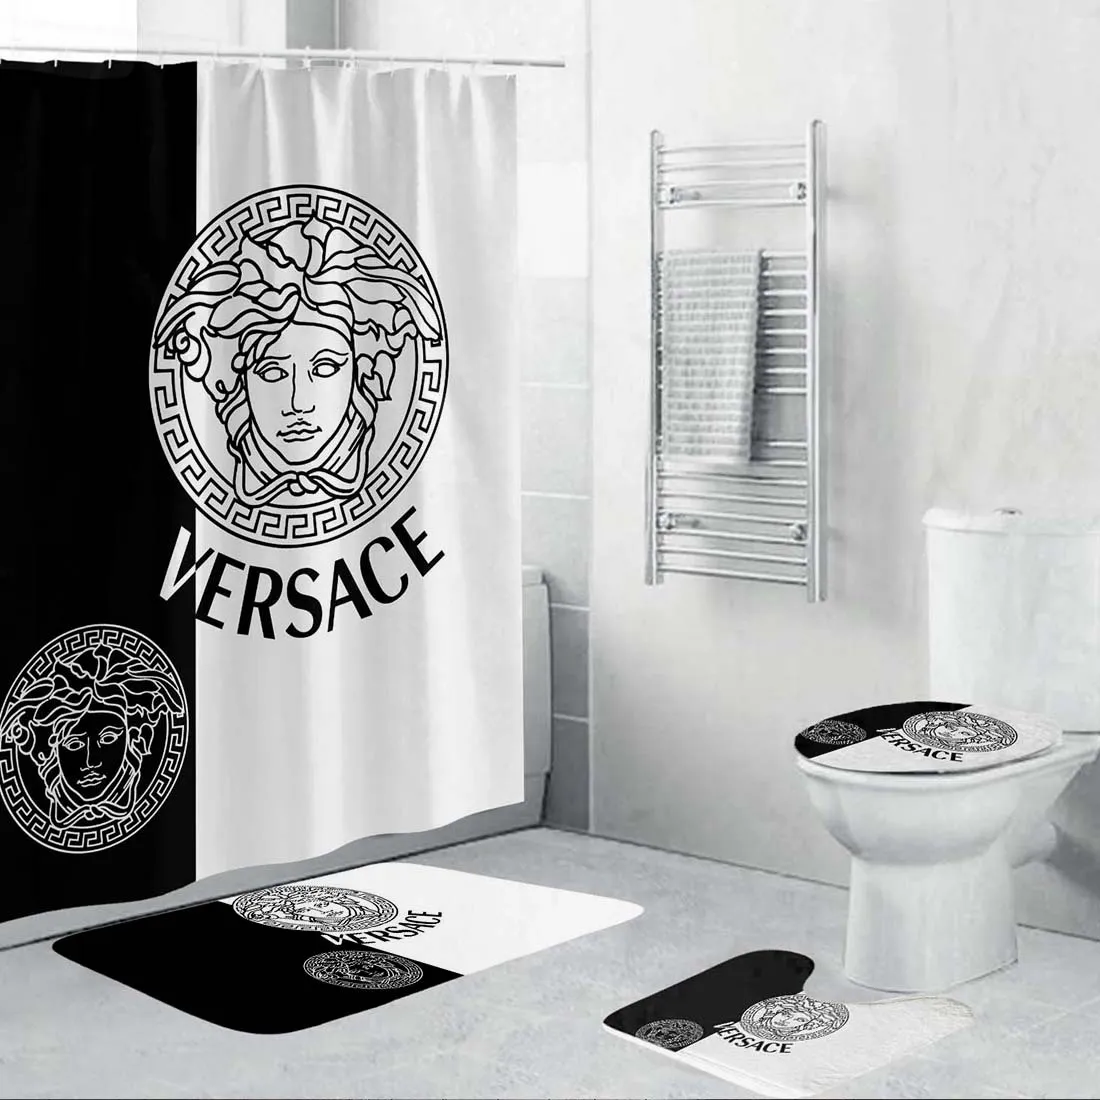 Versace Black White Bathroom Set Bath Mat Hypebeast Home Decor Luxury Fashion Brand